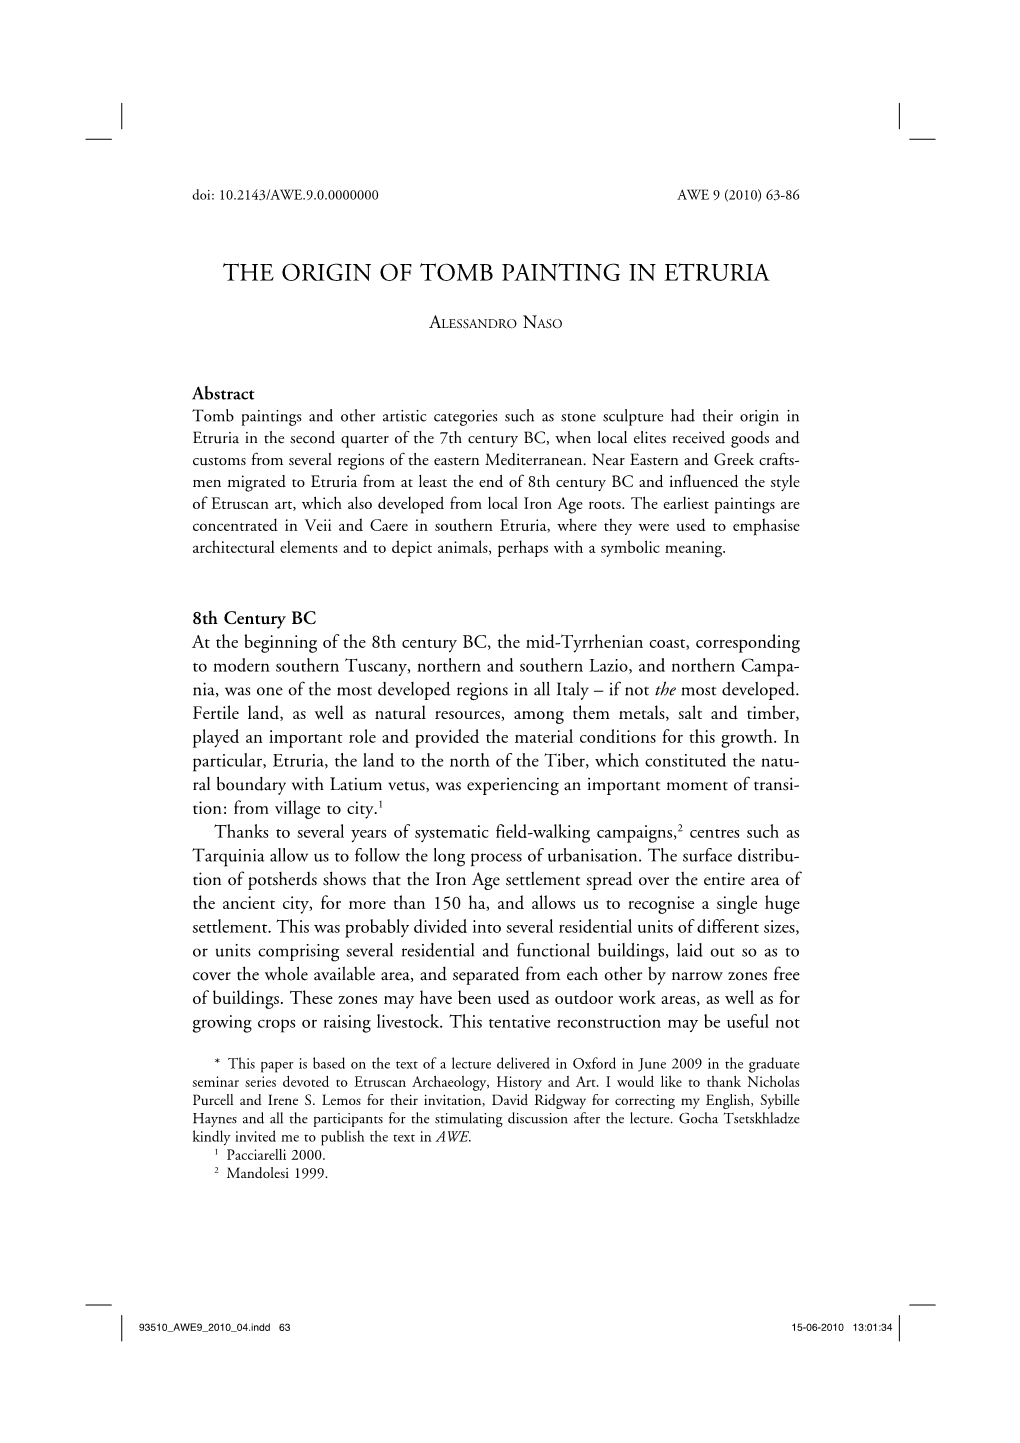 The Origin of Tomb Painting in Etruria